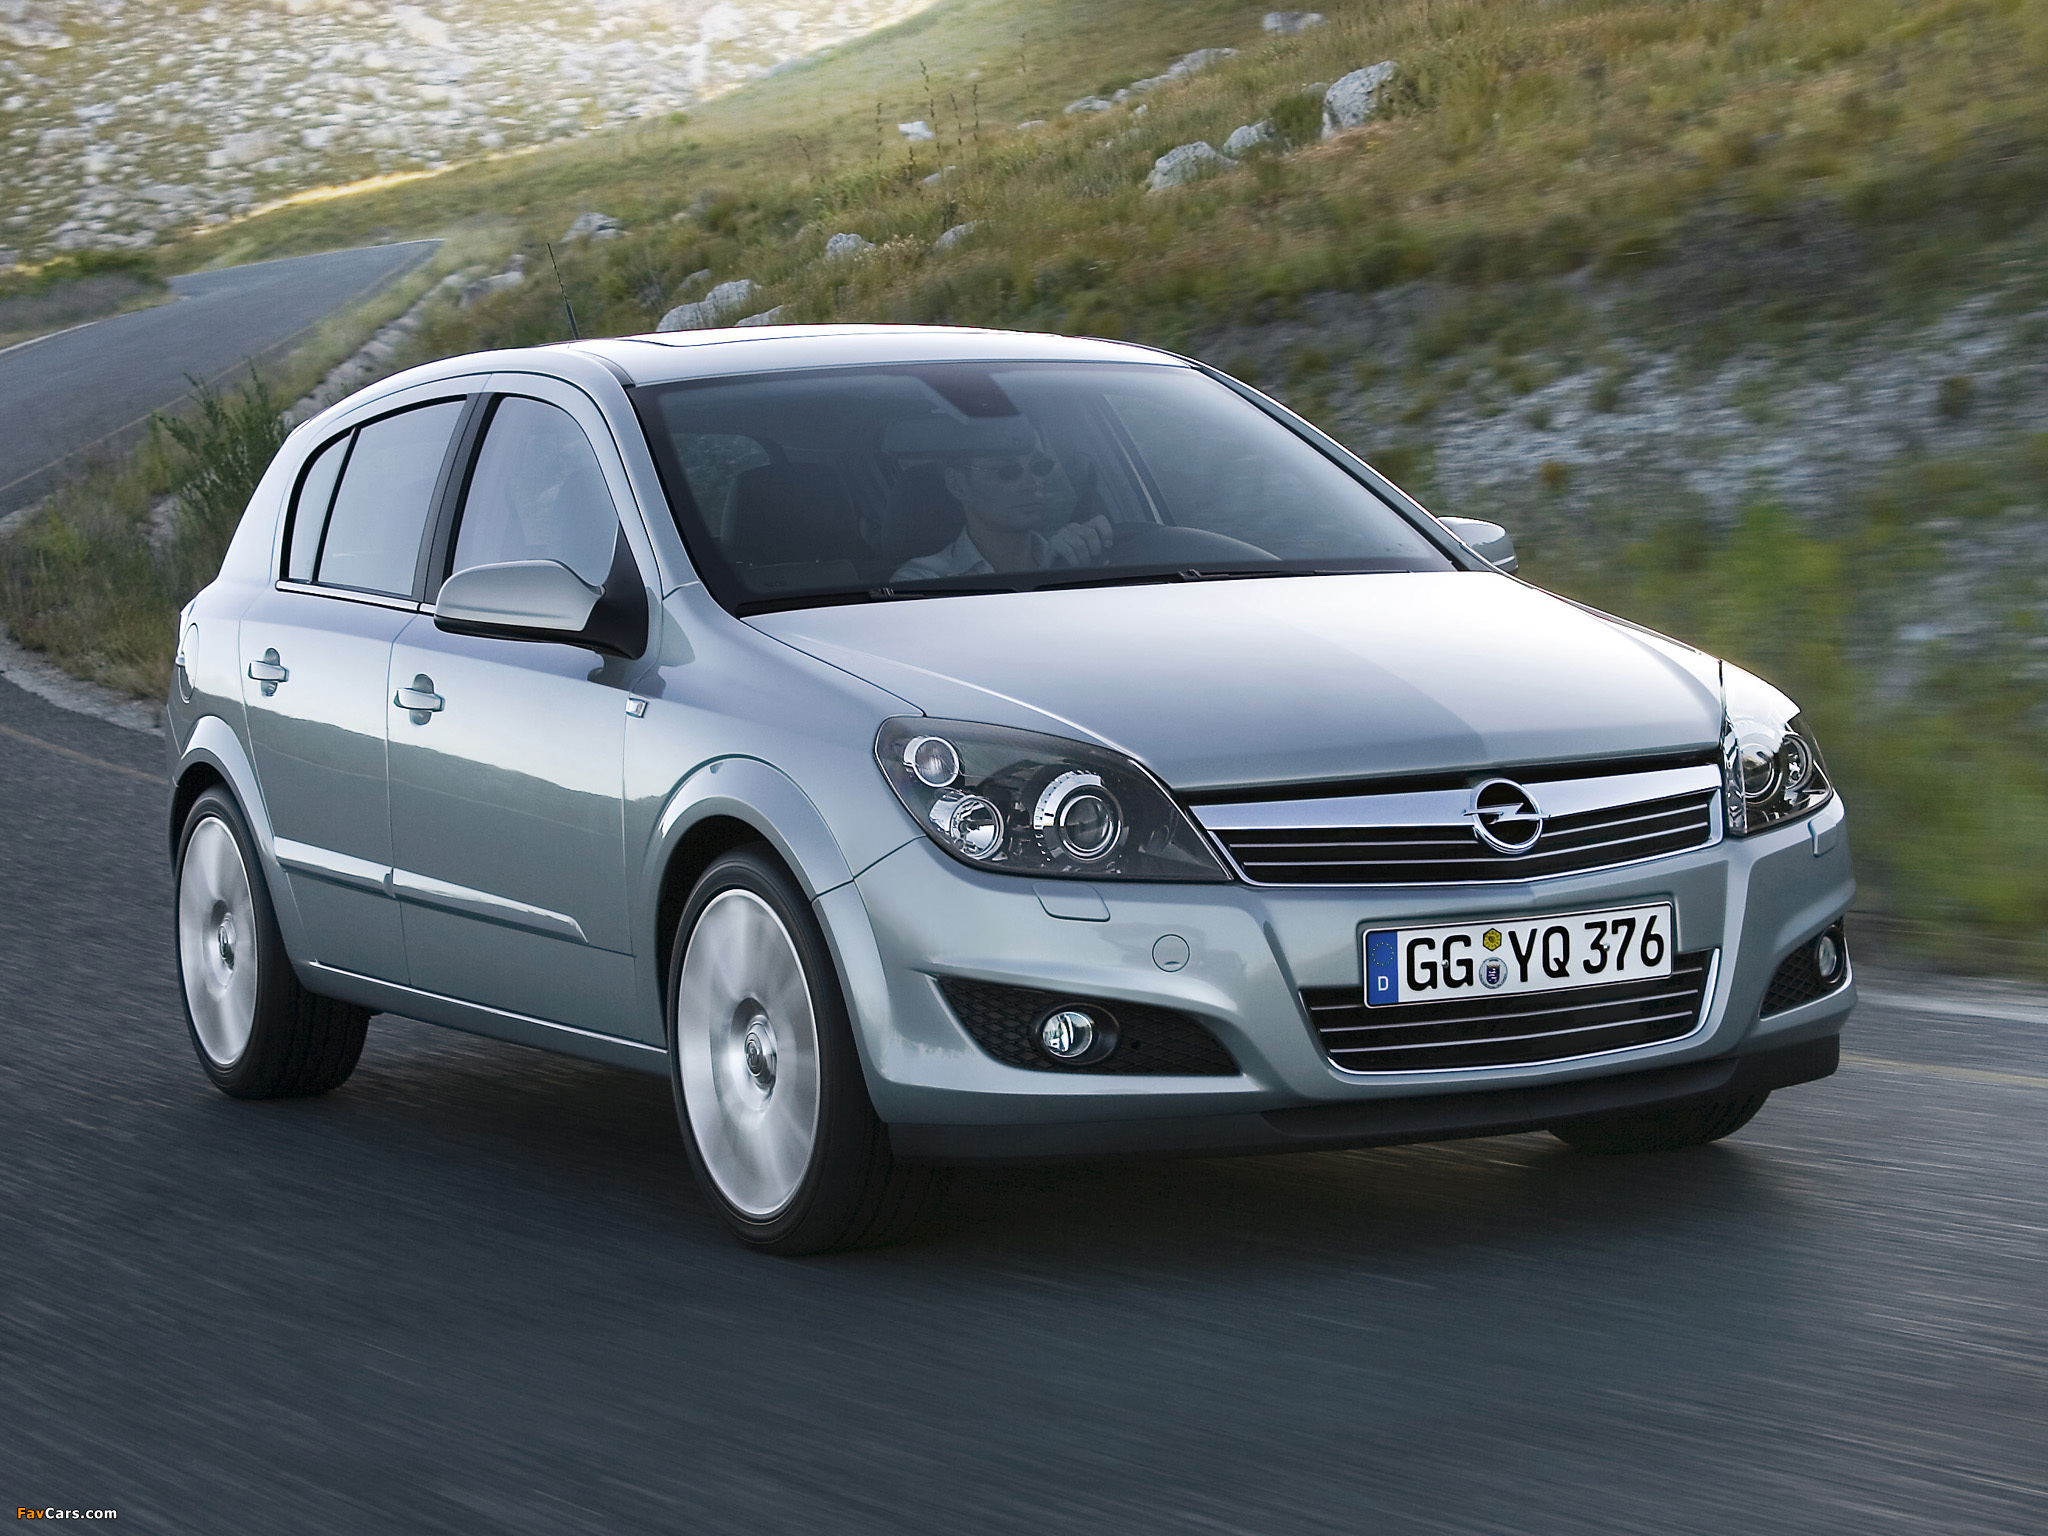 Opel Astra Hatchback (H) 2007 photos (2048 x 1536)